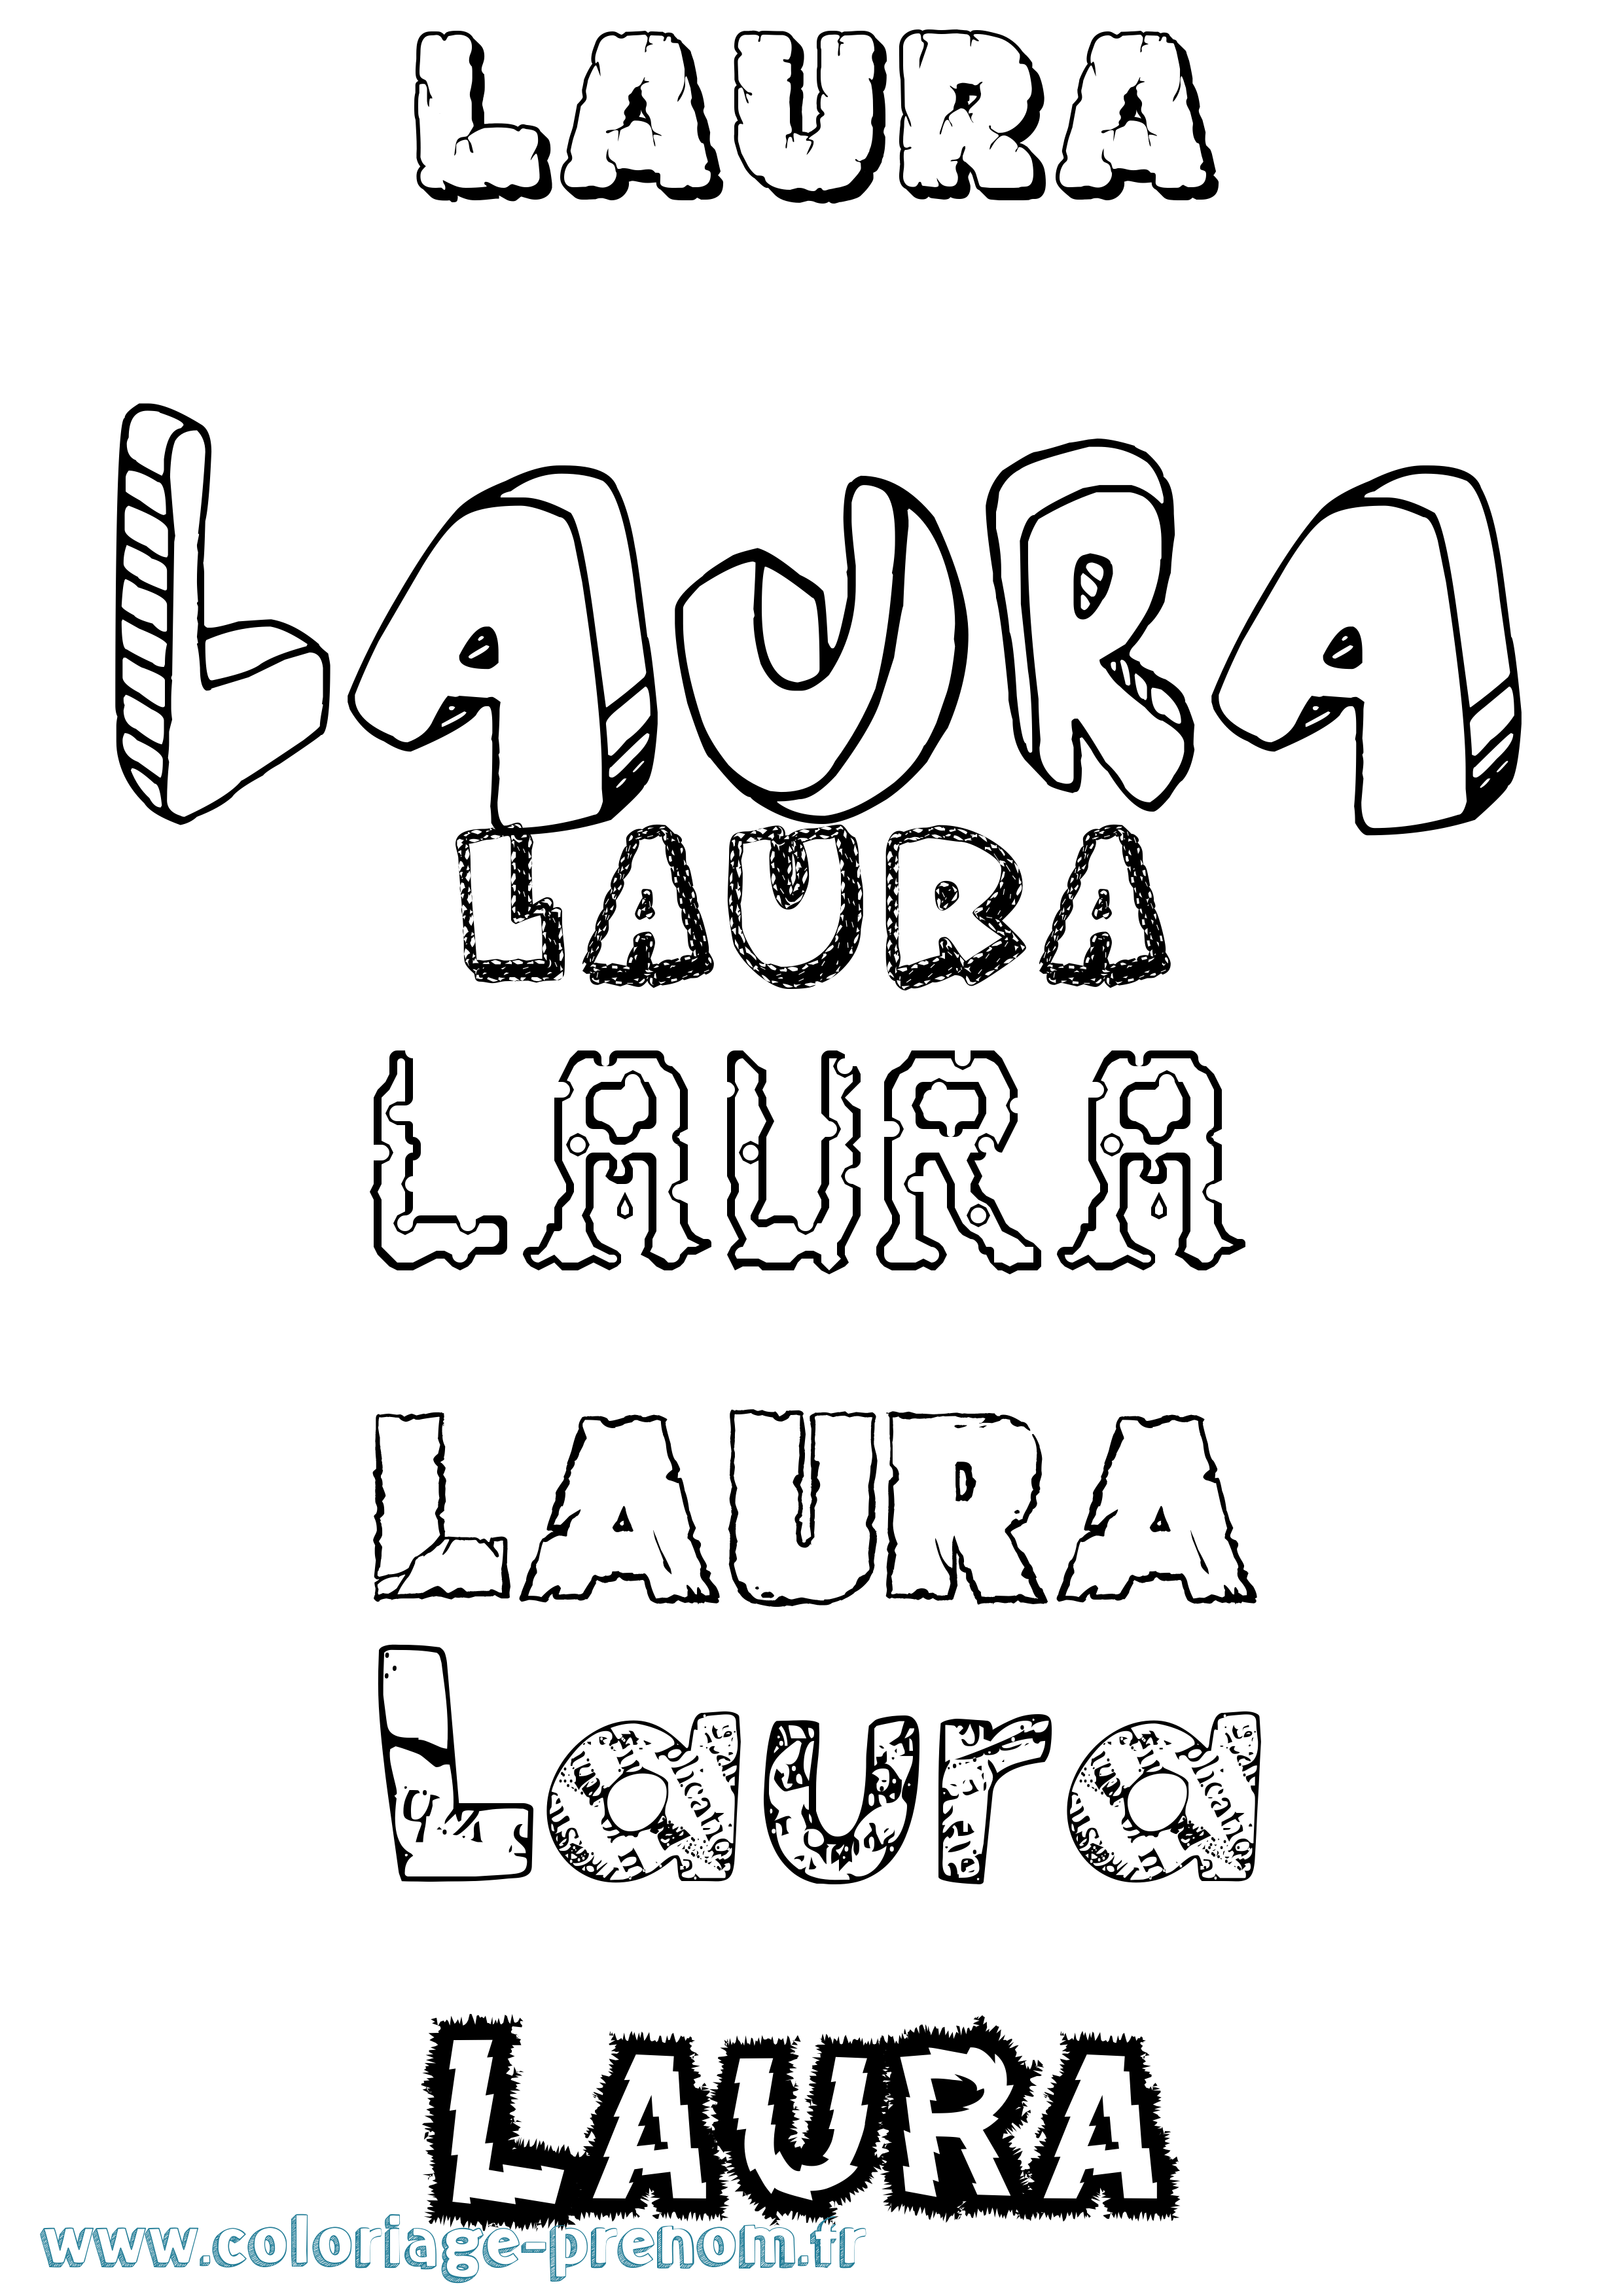 Coloriage prénom Laura